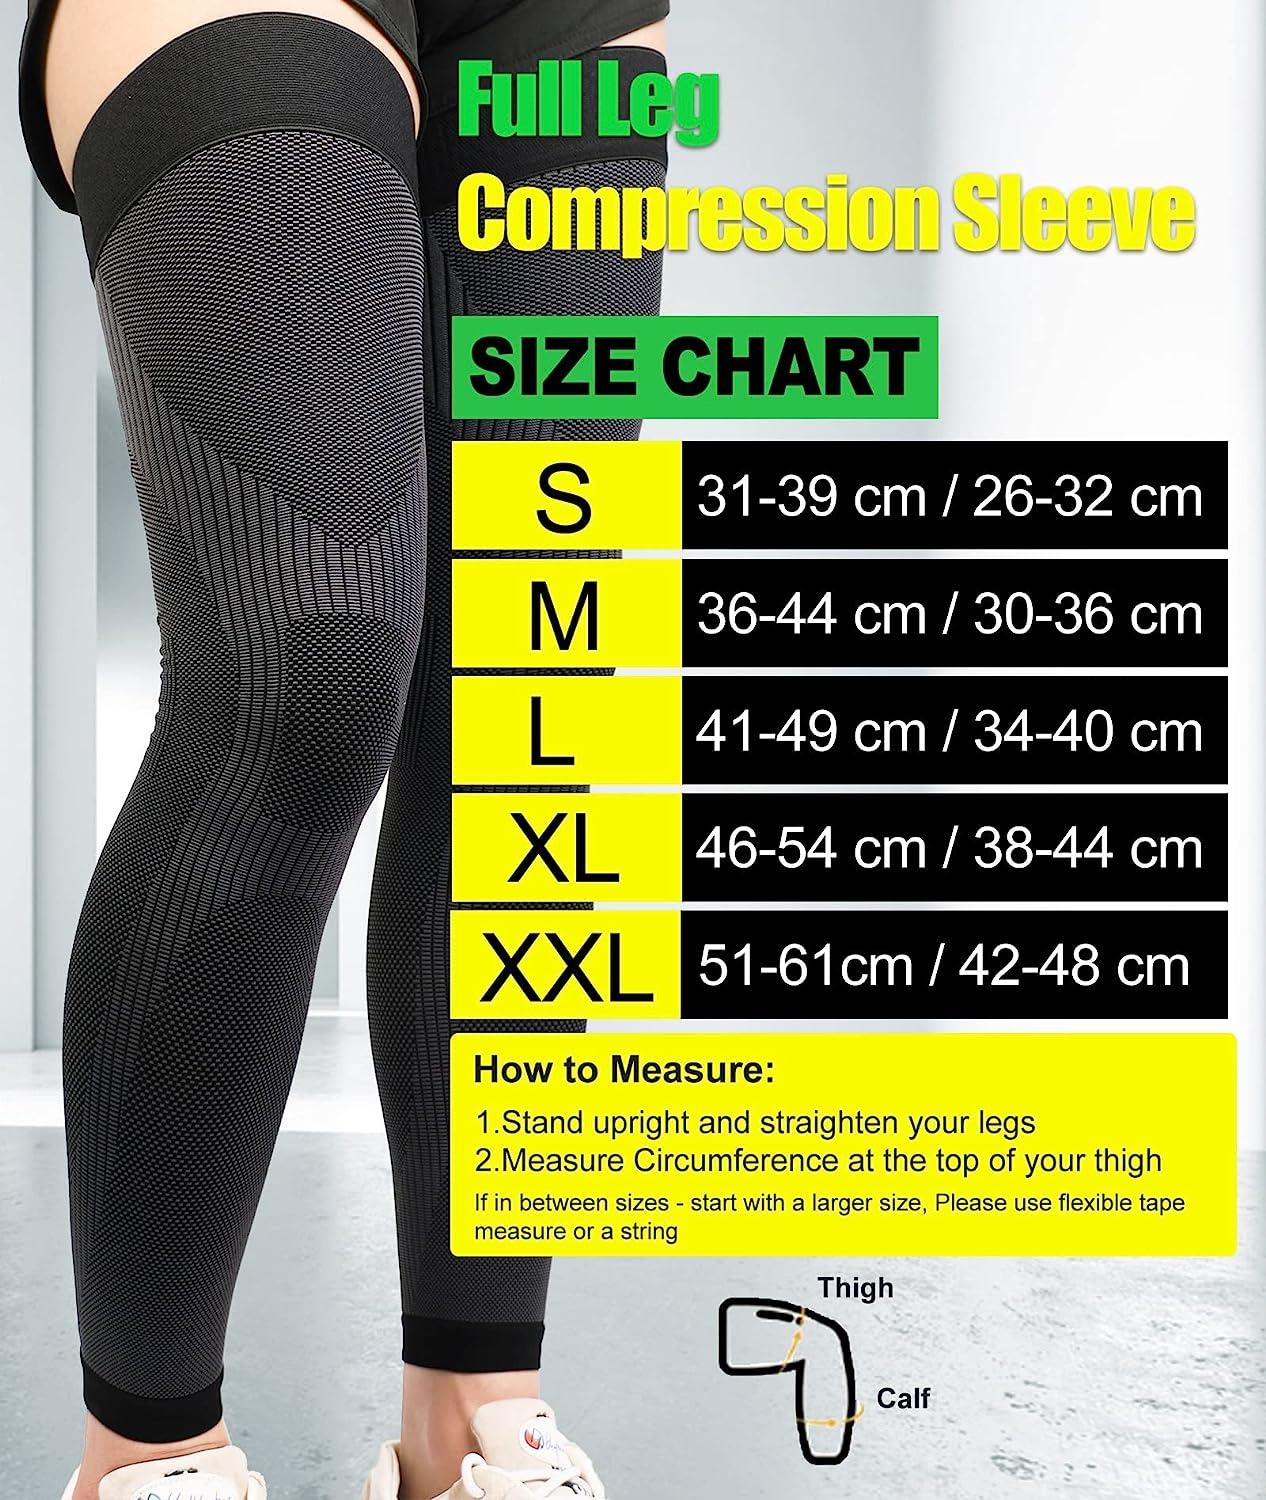 Thigh High Open Toe 20-30 mmHg Firm Compression Stocking Leg With YKK Zipper